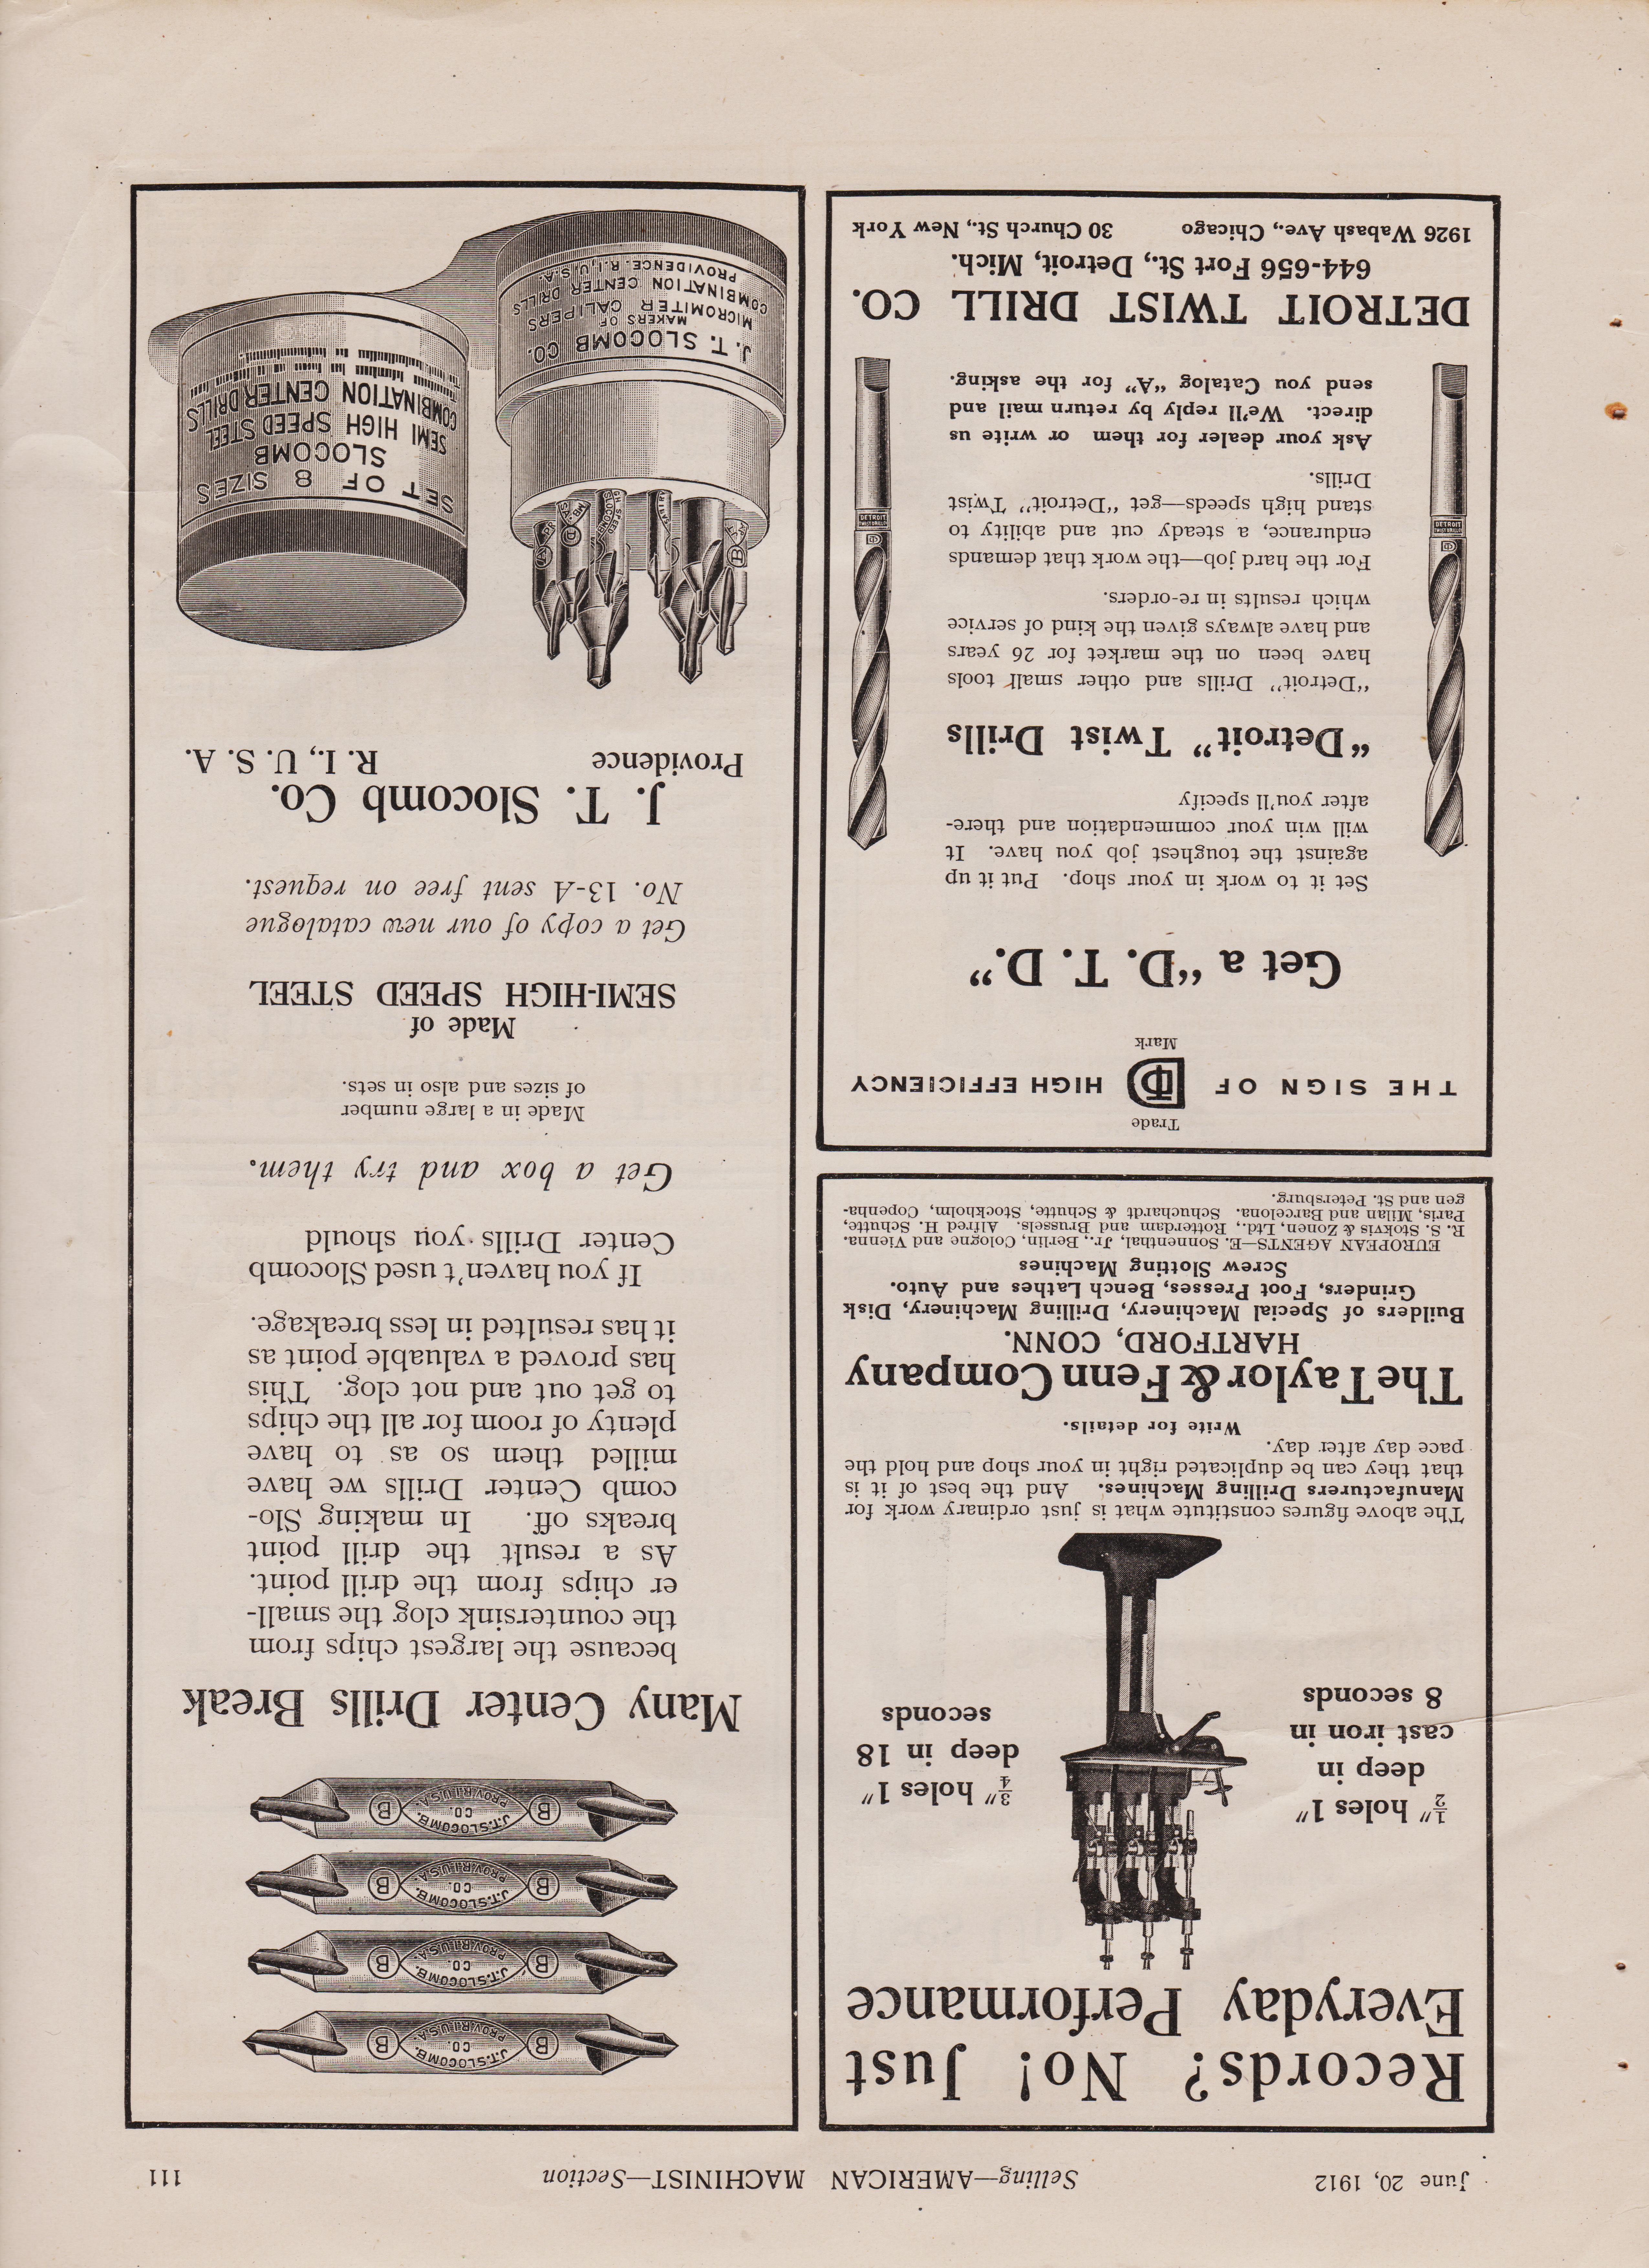 
https://antiquemachinery.com/images-2021/American-Machinist-Magazine-June-1912-pg-111-Dertoit-Twist-Drills-Michigan-Taylor-J-T-Slocomb-Center-Drills-semi-high-speed-steel.jpeg